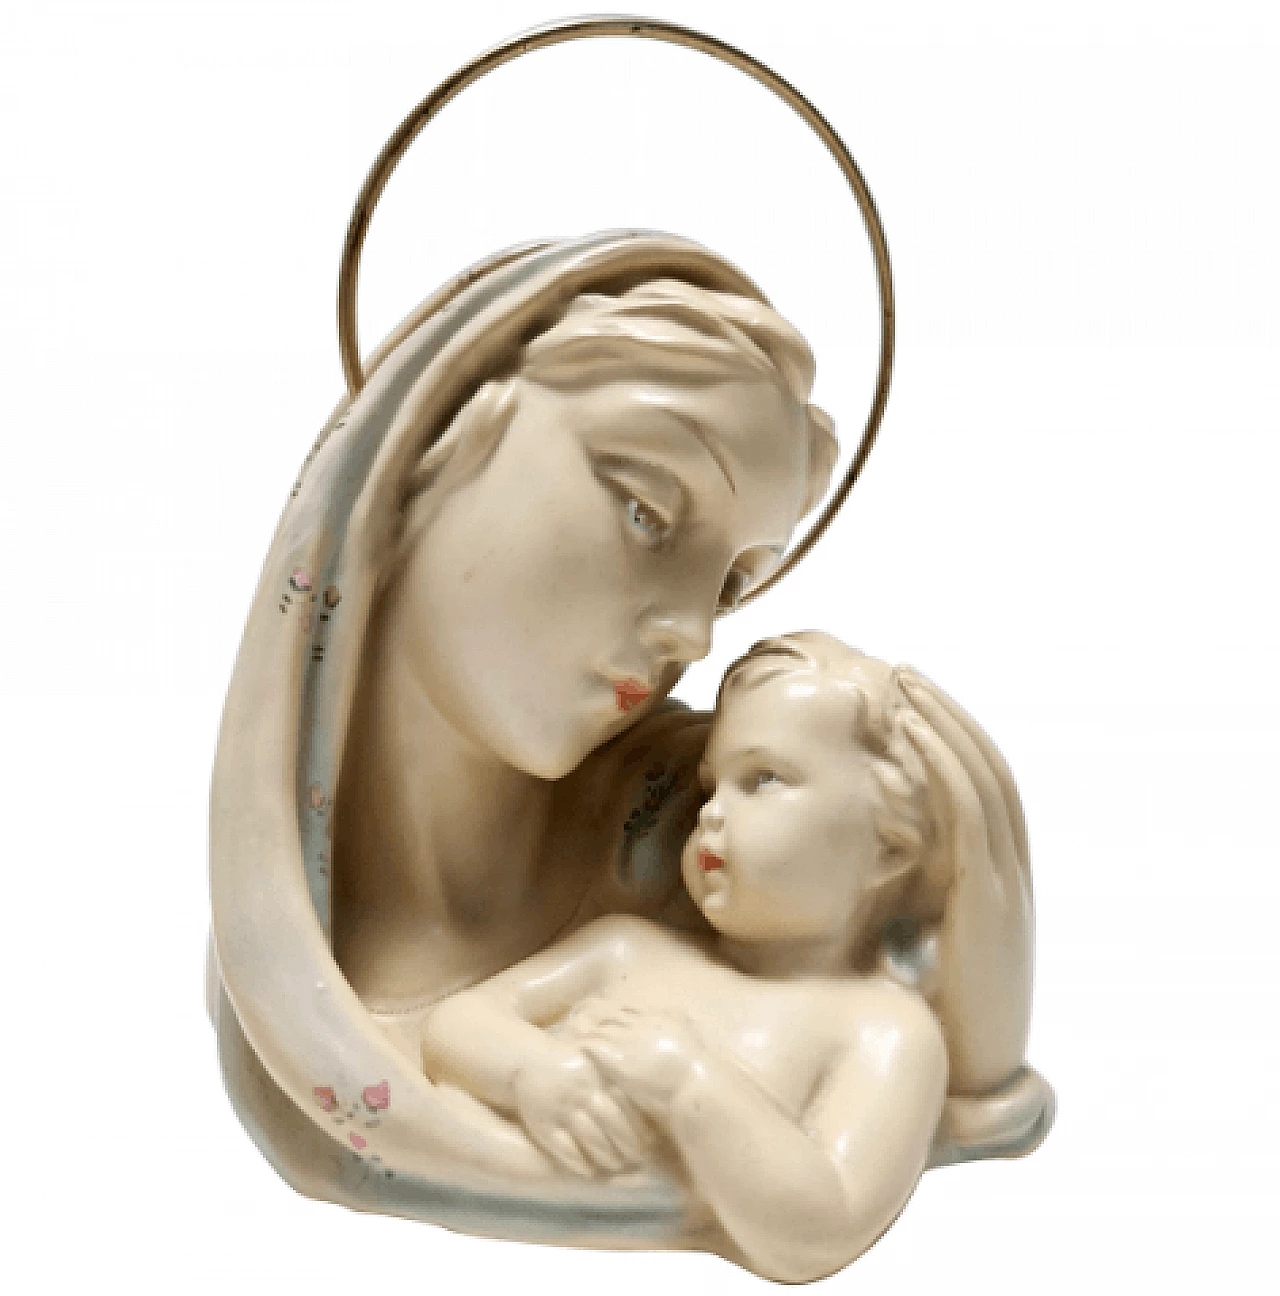 Arturo Pannunzio, Madonna and Child, ceramic and brass sculpture, 1940s 1